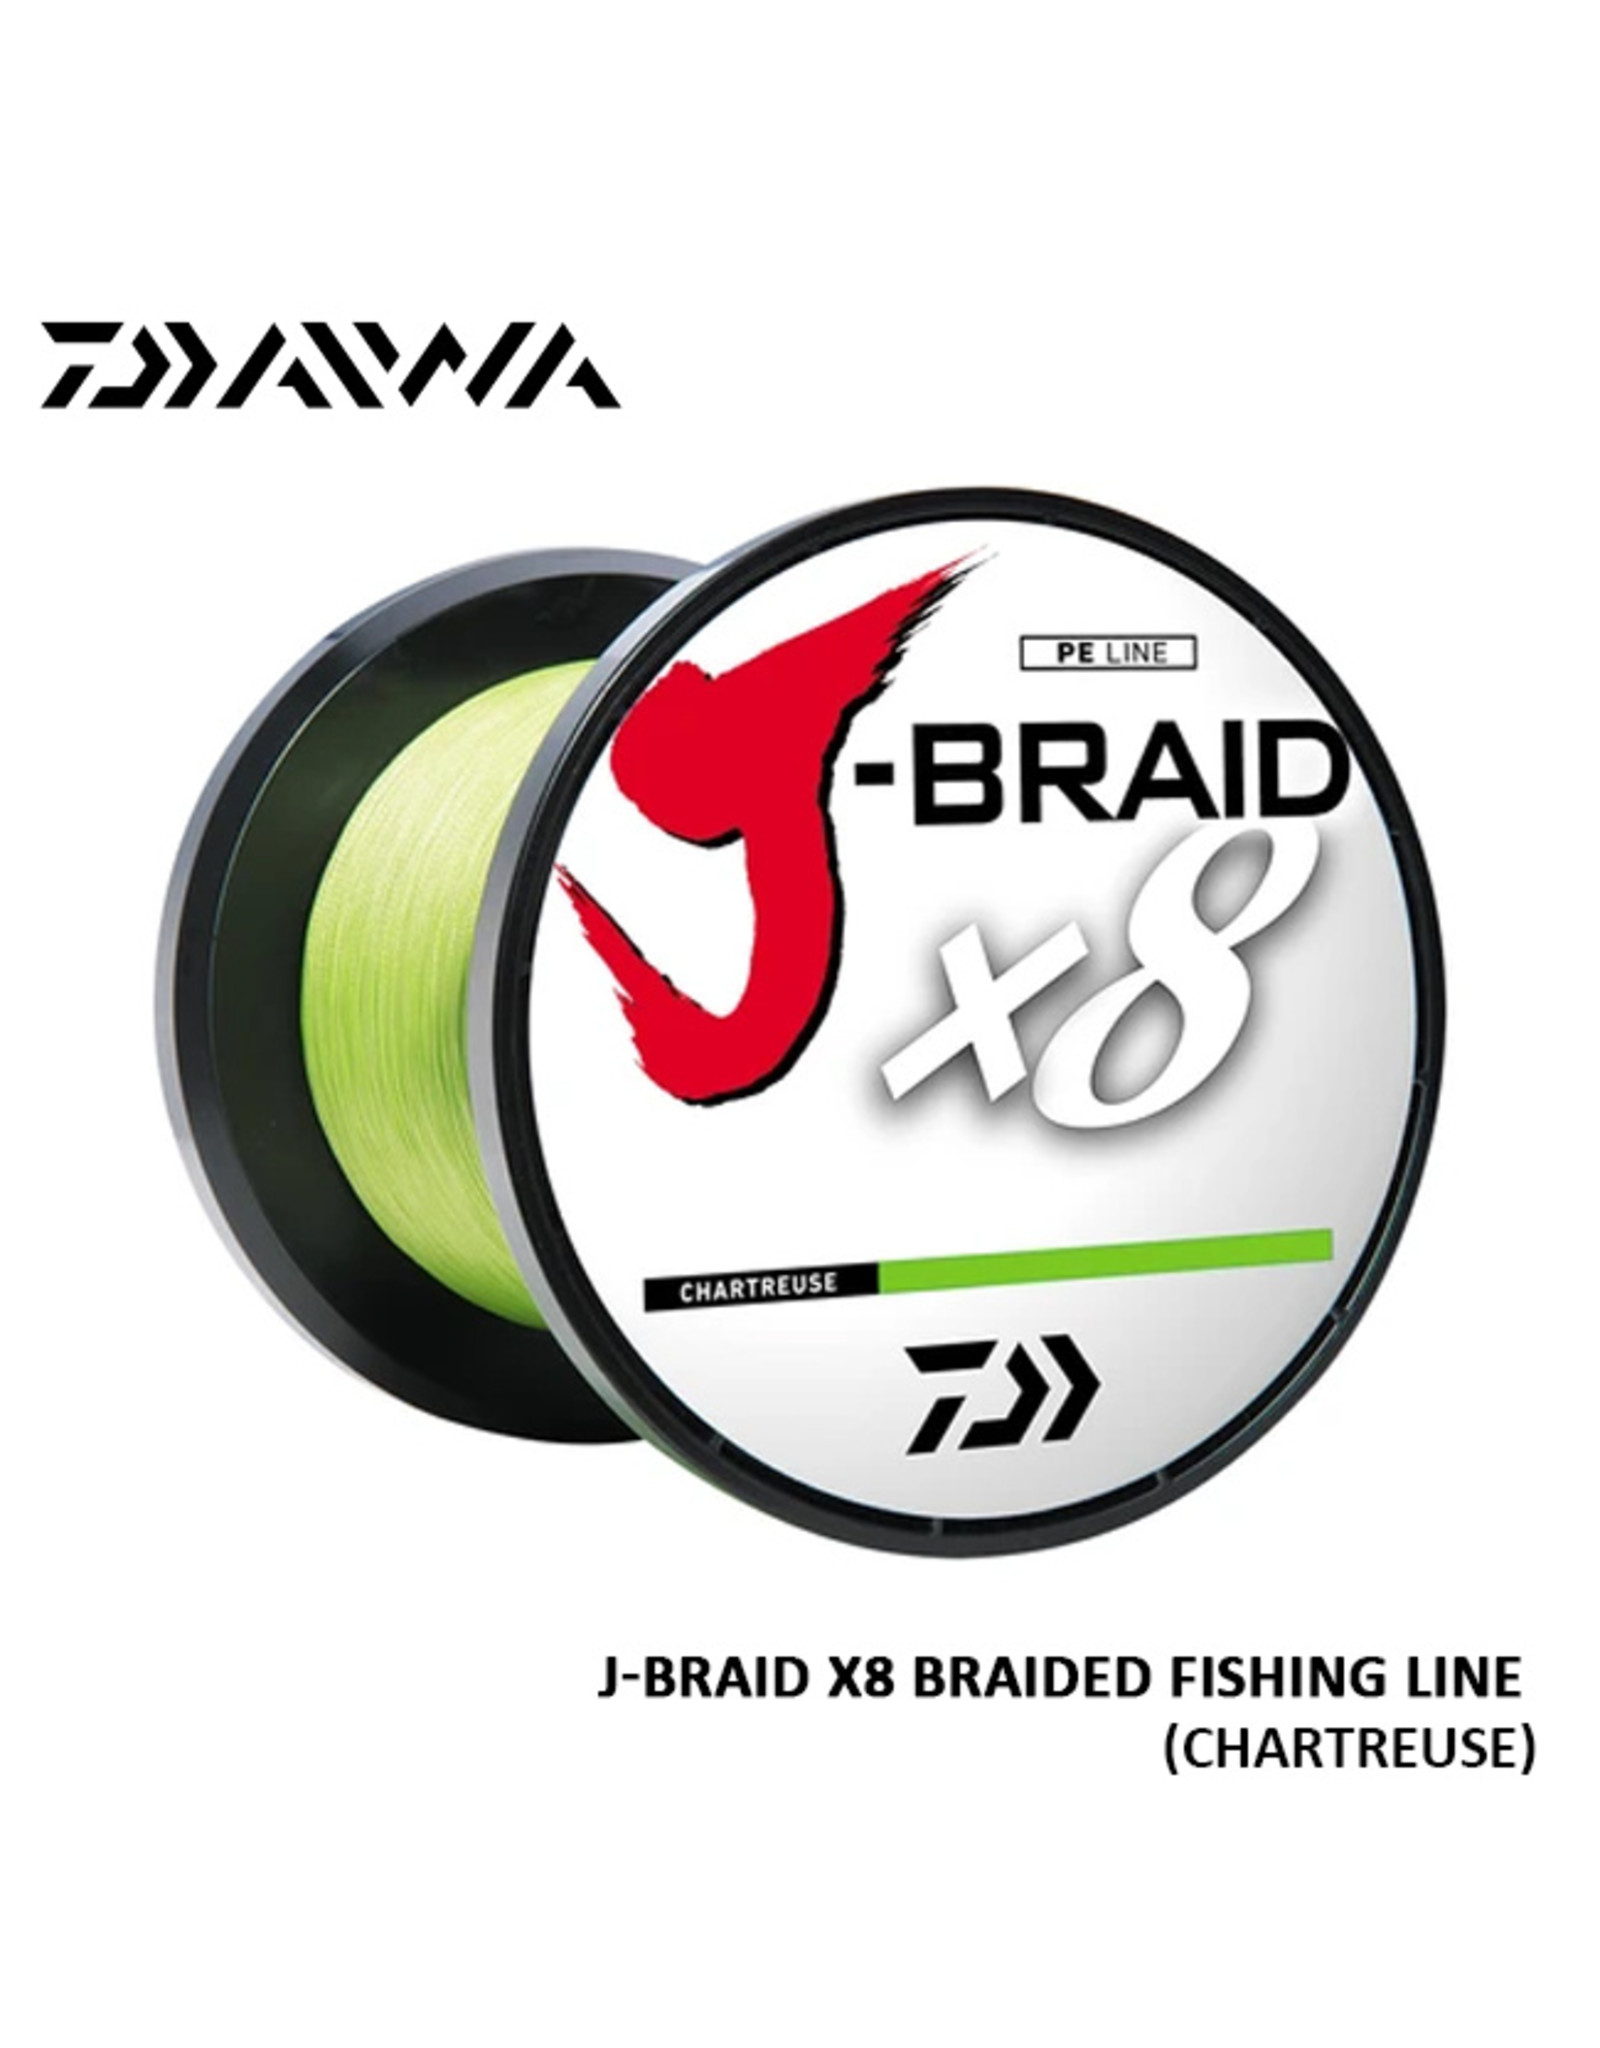 DAIWA (DAI) DAI, J-BRAID X8 FISHING LINE 300METER/CHARTREUSE 20#